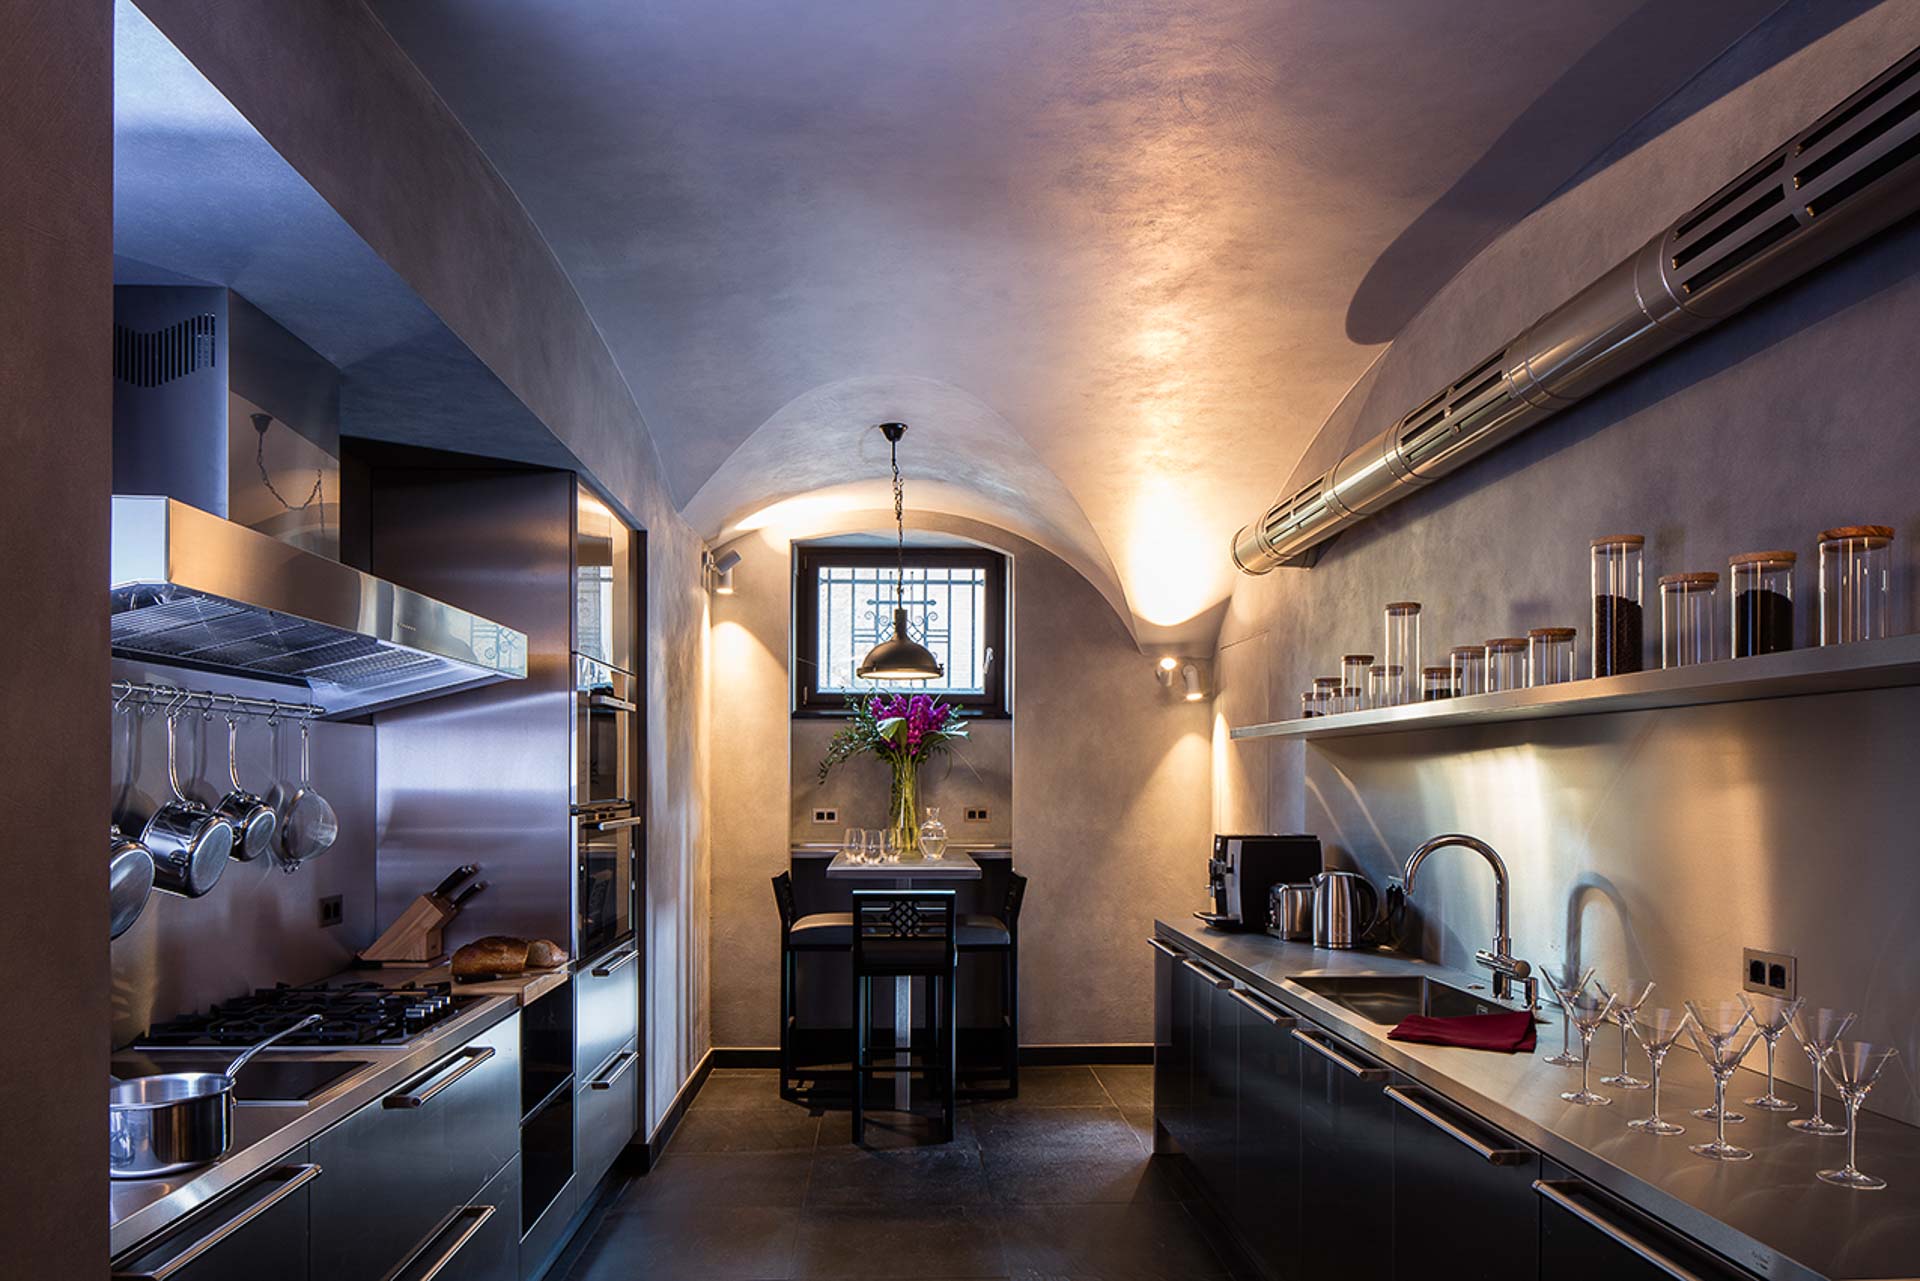 Villa Clara best accommodation Rome luxury home guest service chef italian cuisine kitchen design